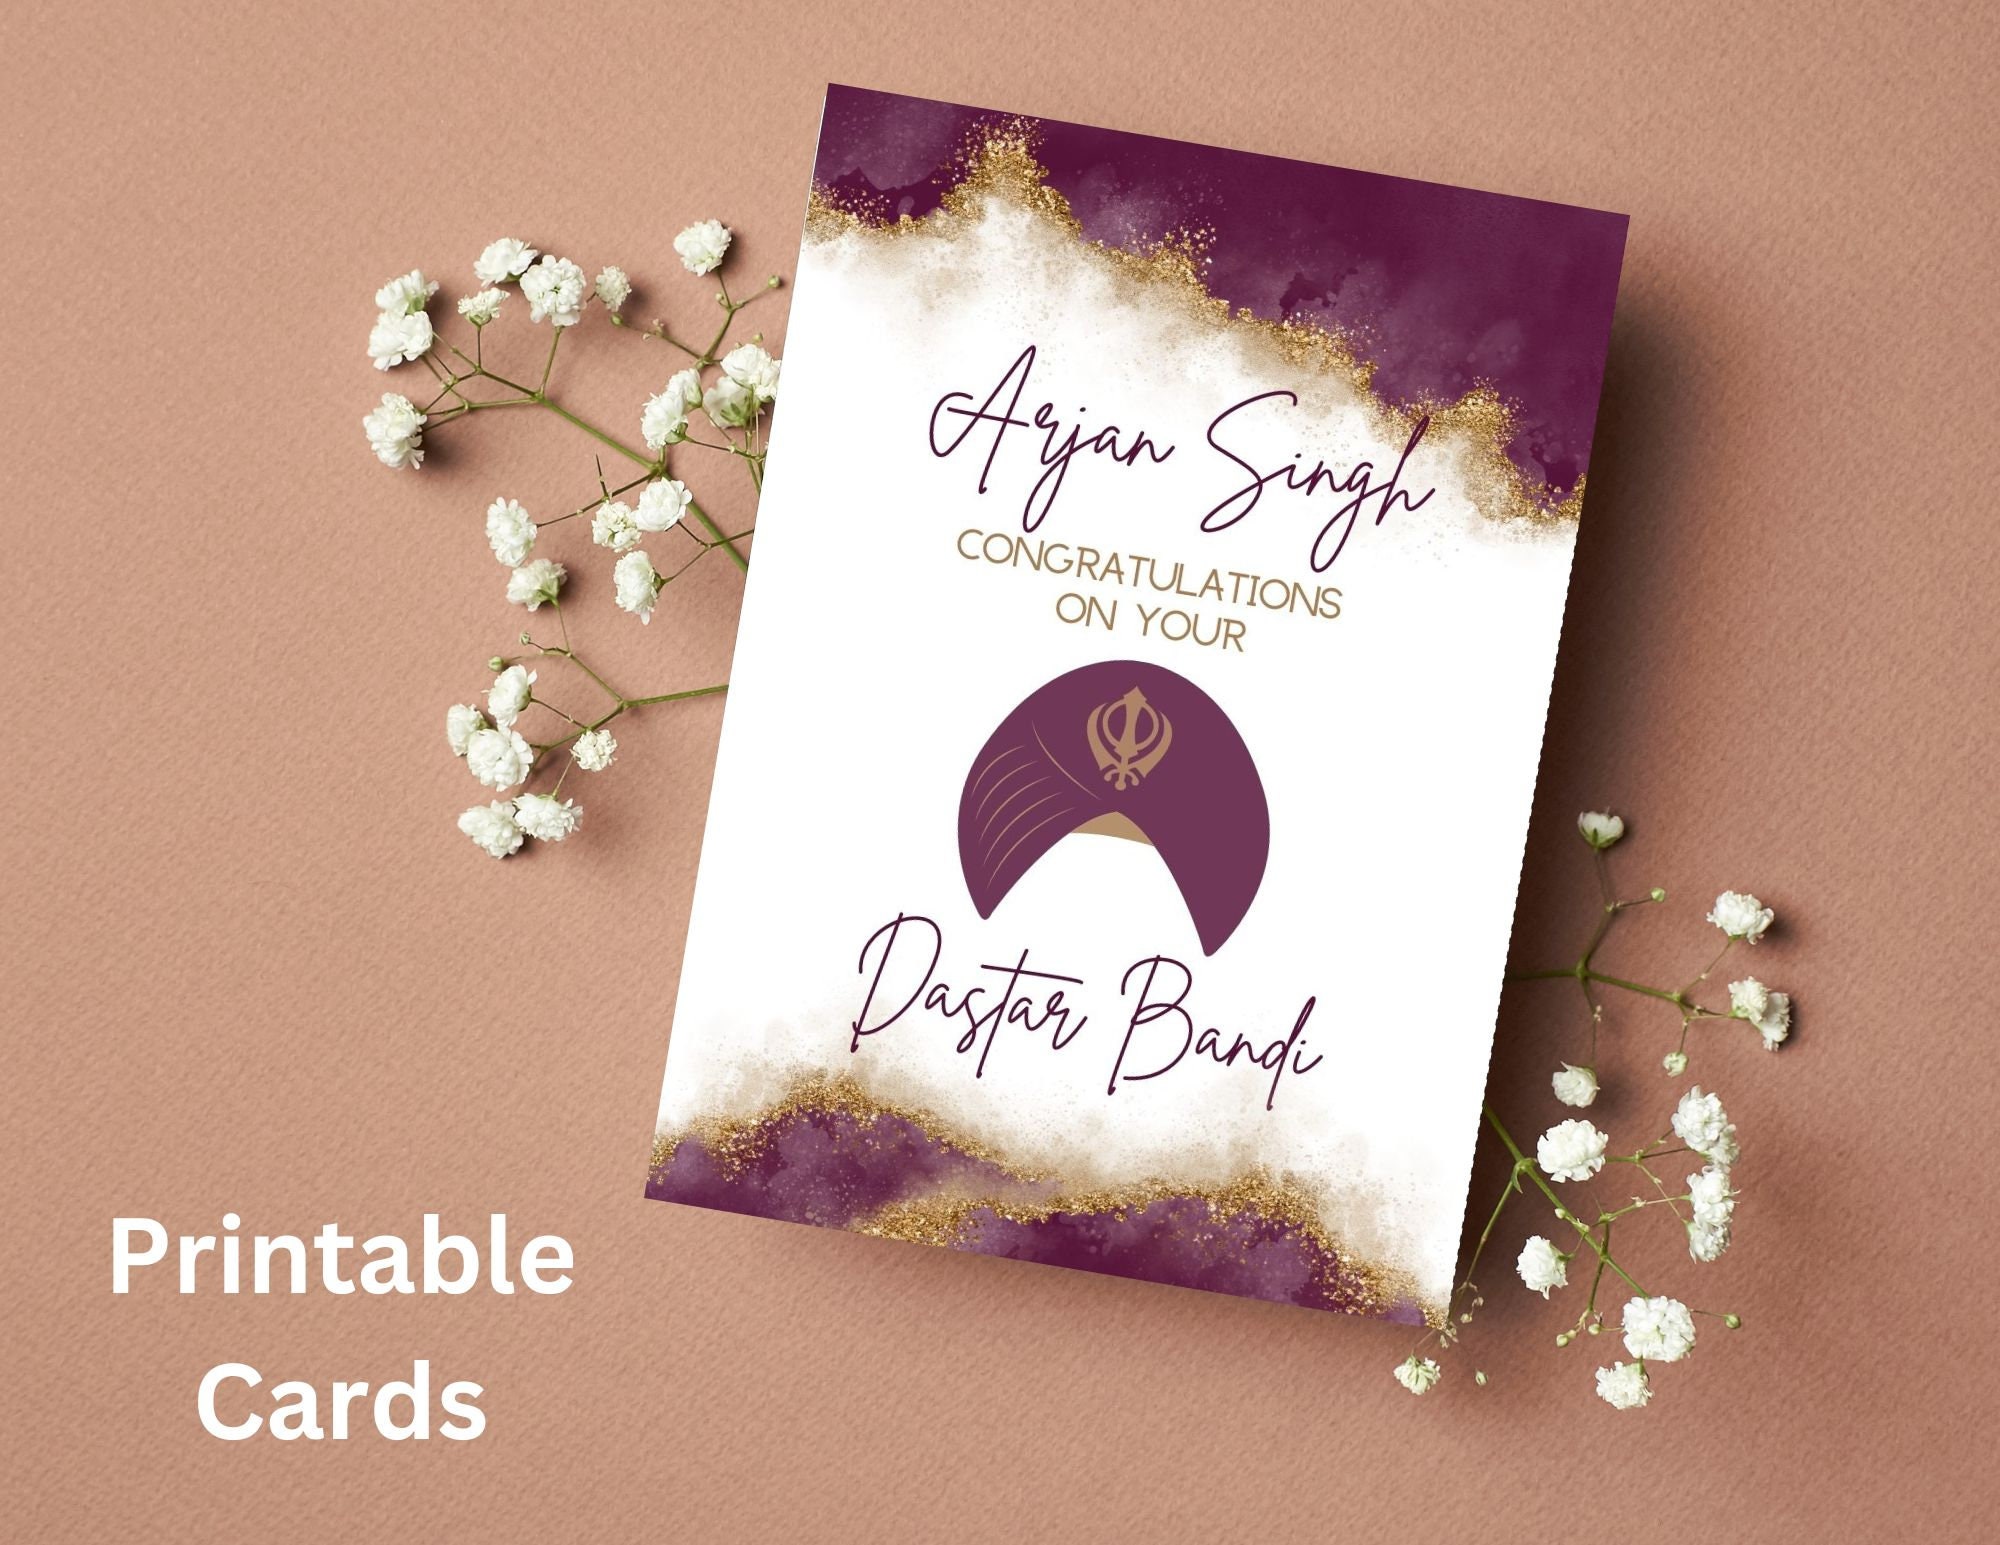 Dastar Bandi Congrats Card Sikh Greeting Cards Sikh Digital